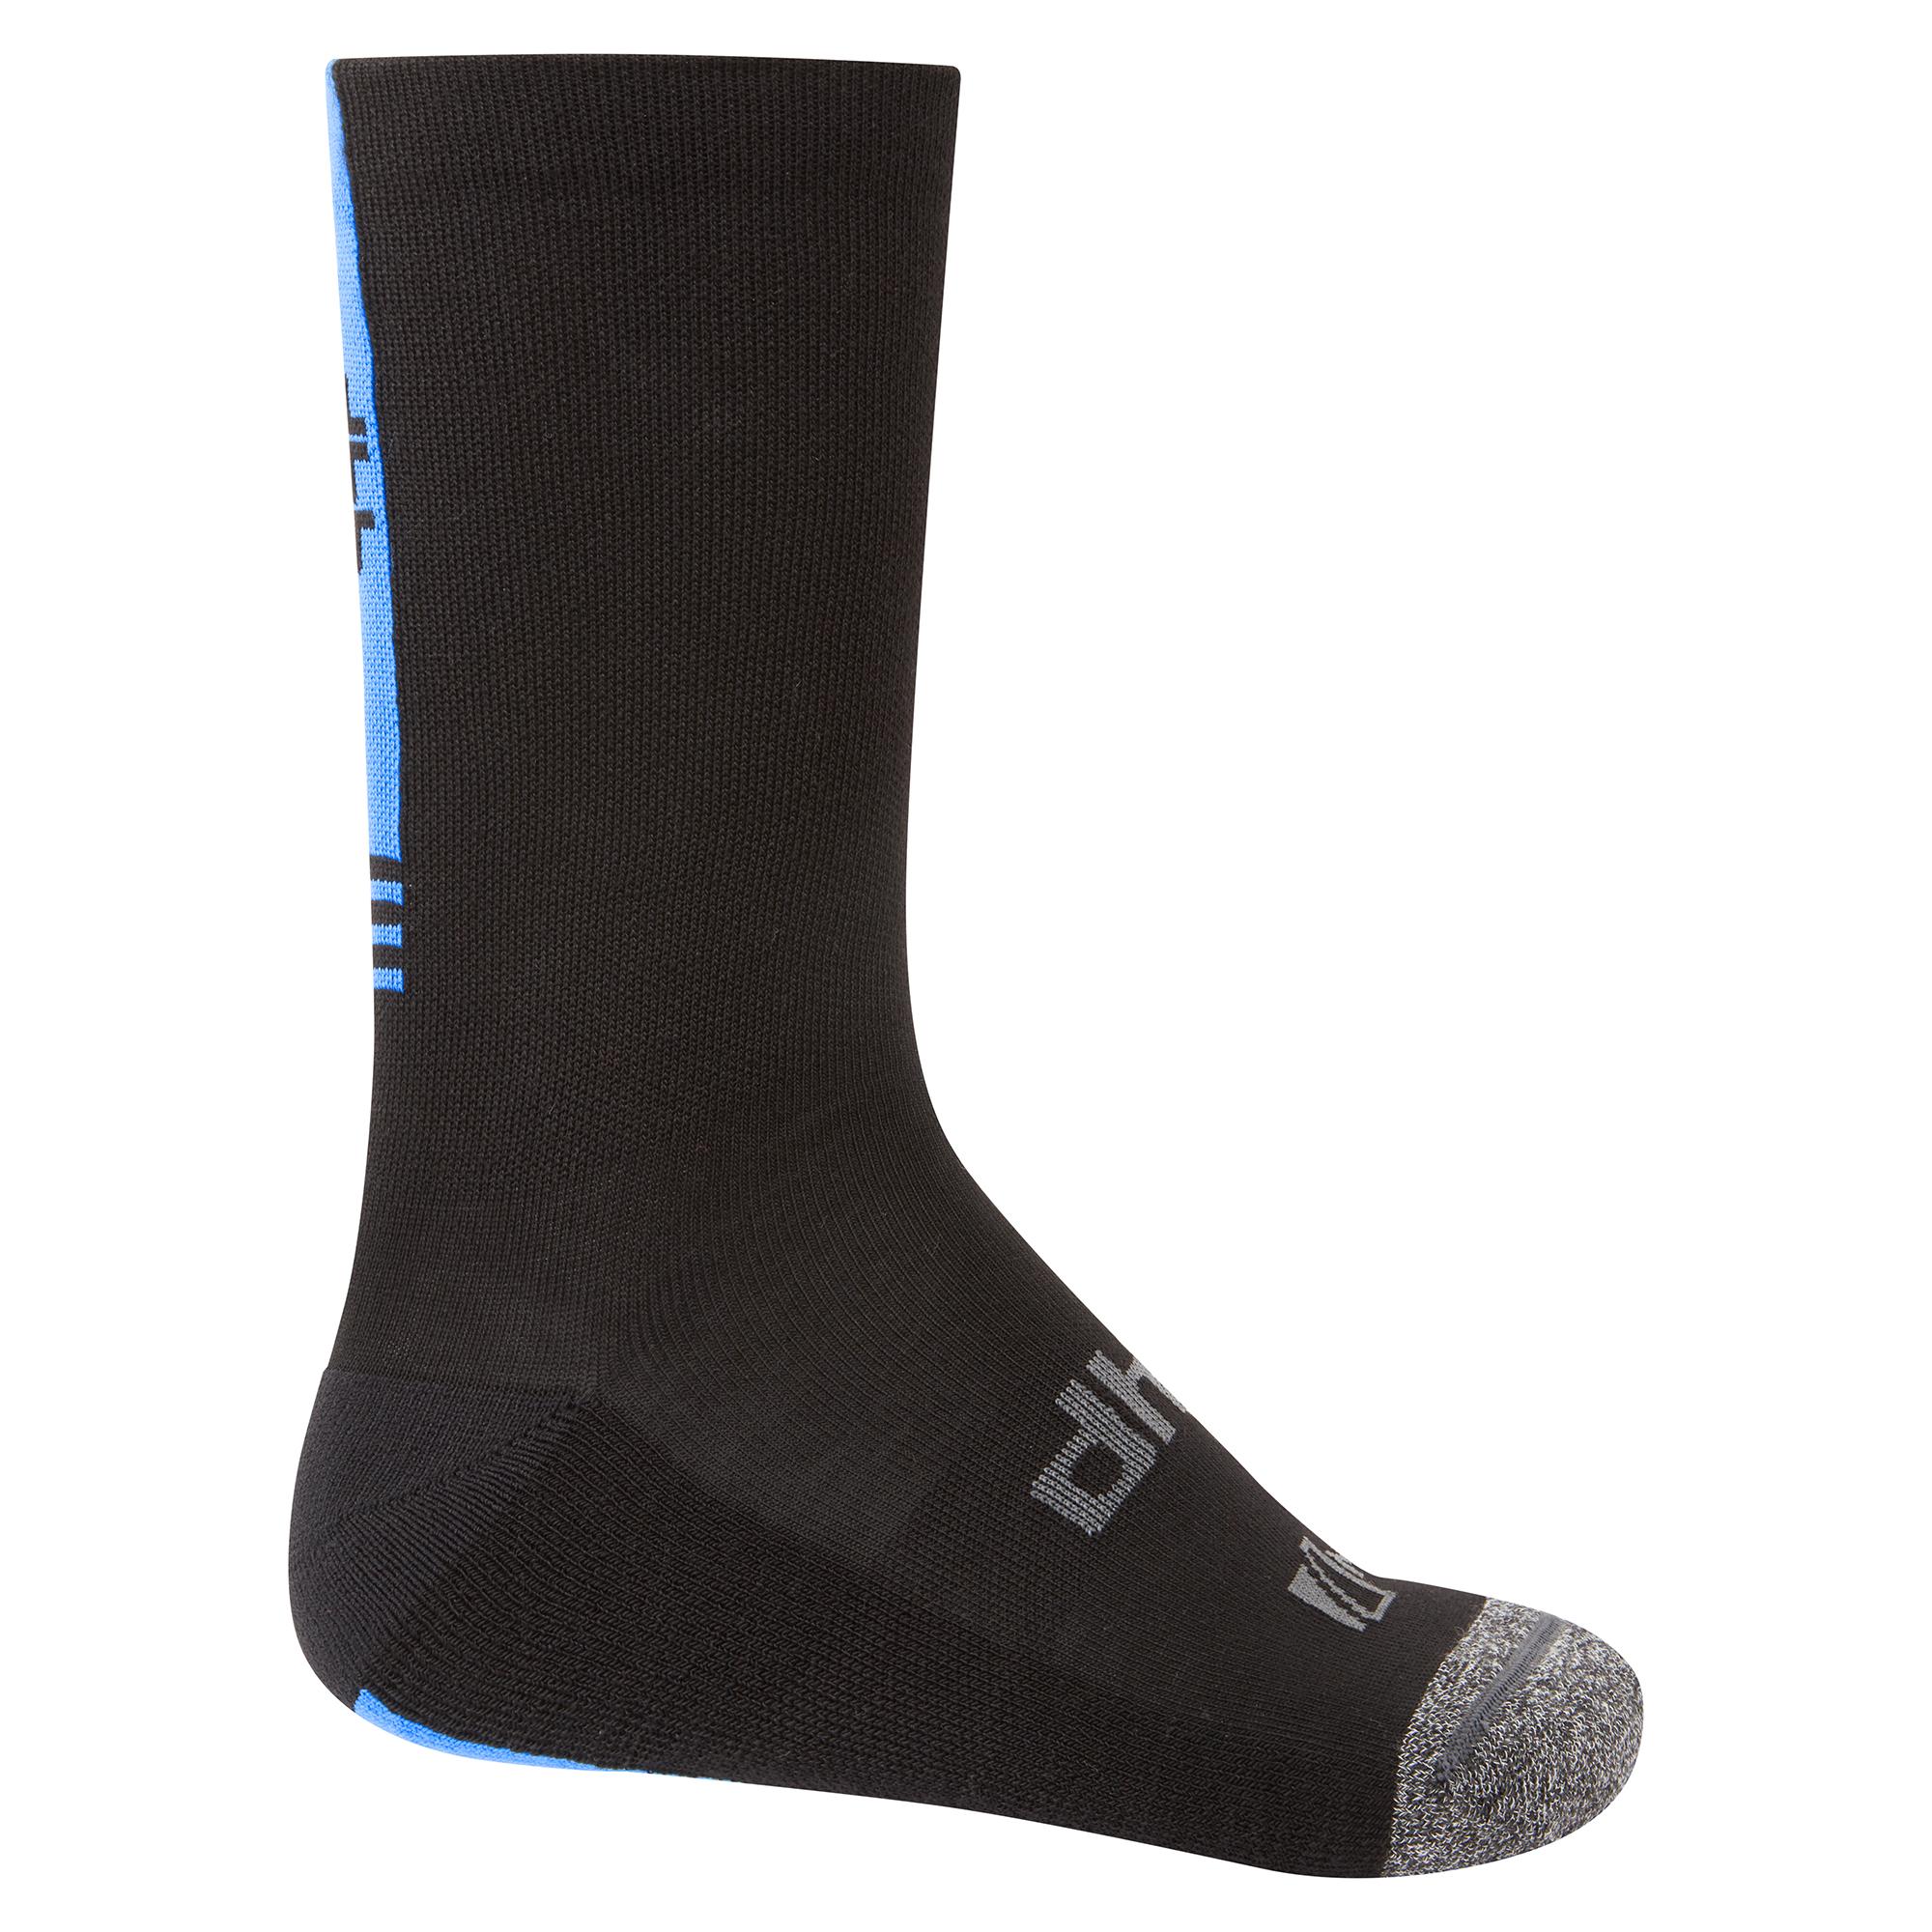 Dhb Aeron Winter Weight Merino Sock 2.0 - Black/blue